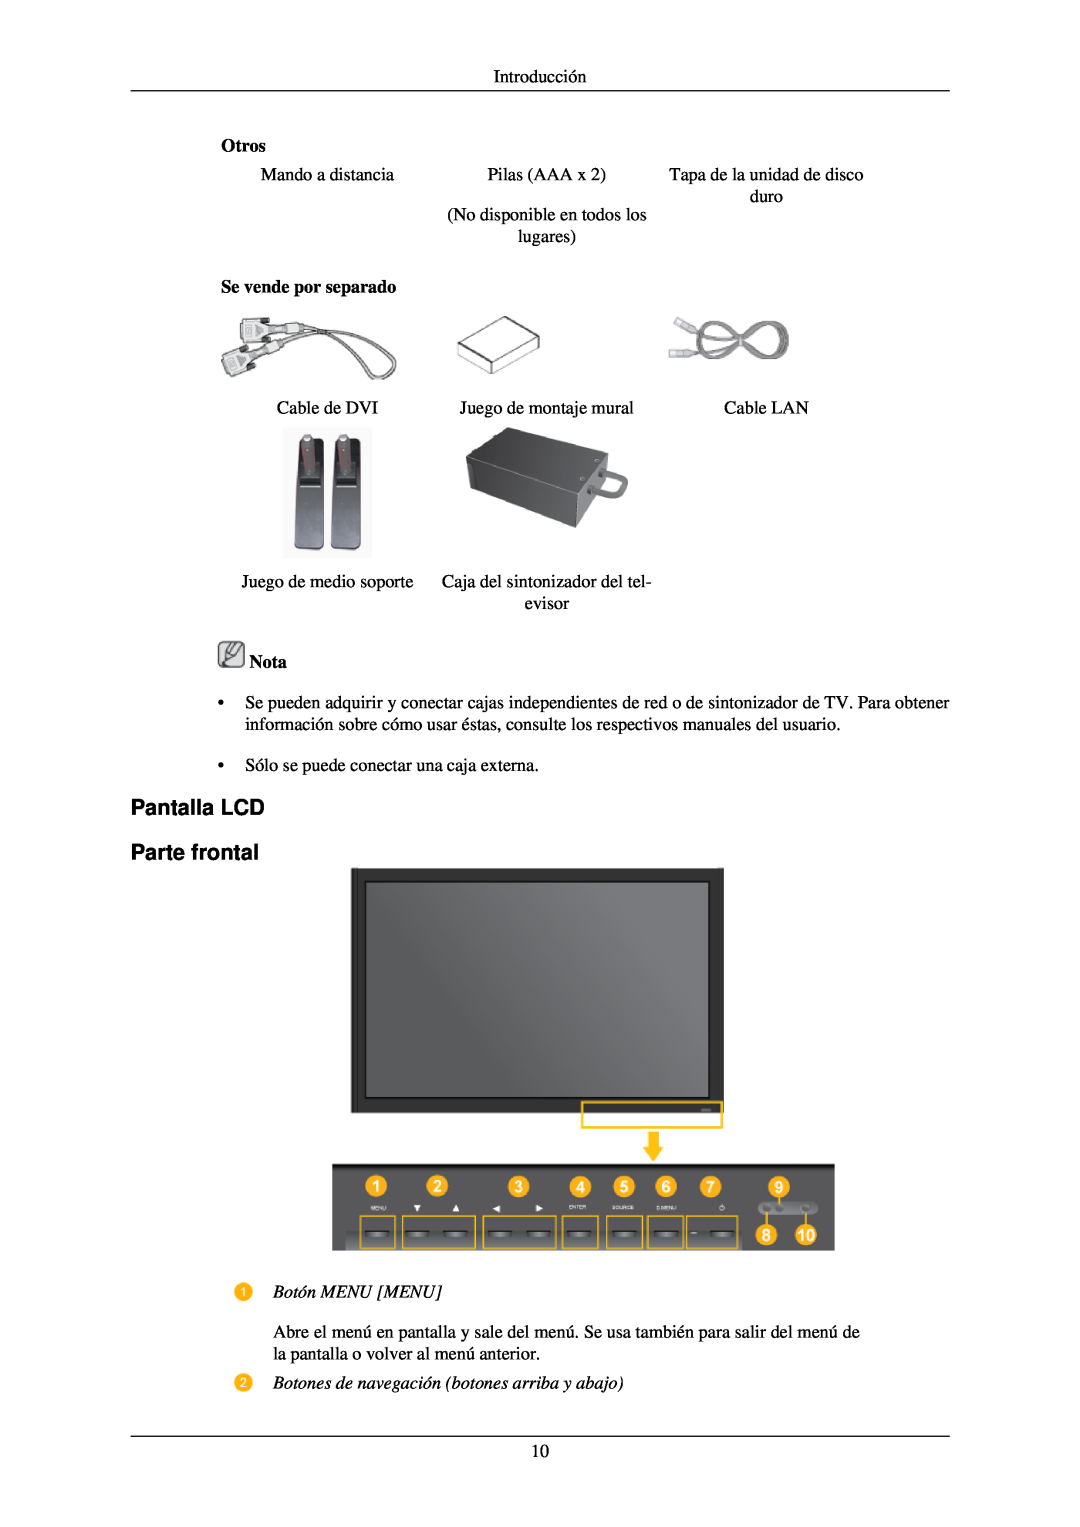 Samsung LH46TCUMBC/EN, LH40TCUMBG/EN manual Pantalla LCD Parte frontal, Se vende por separado, Botón MENU MENU, Otros, Nota 